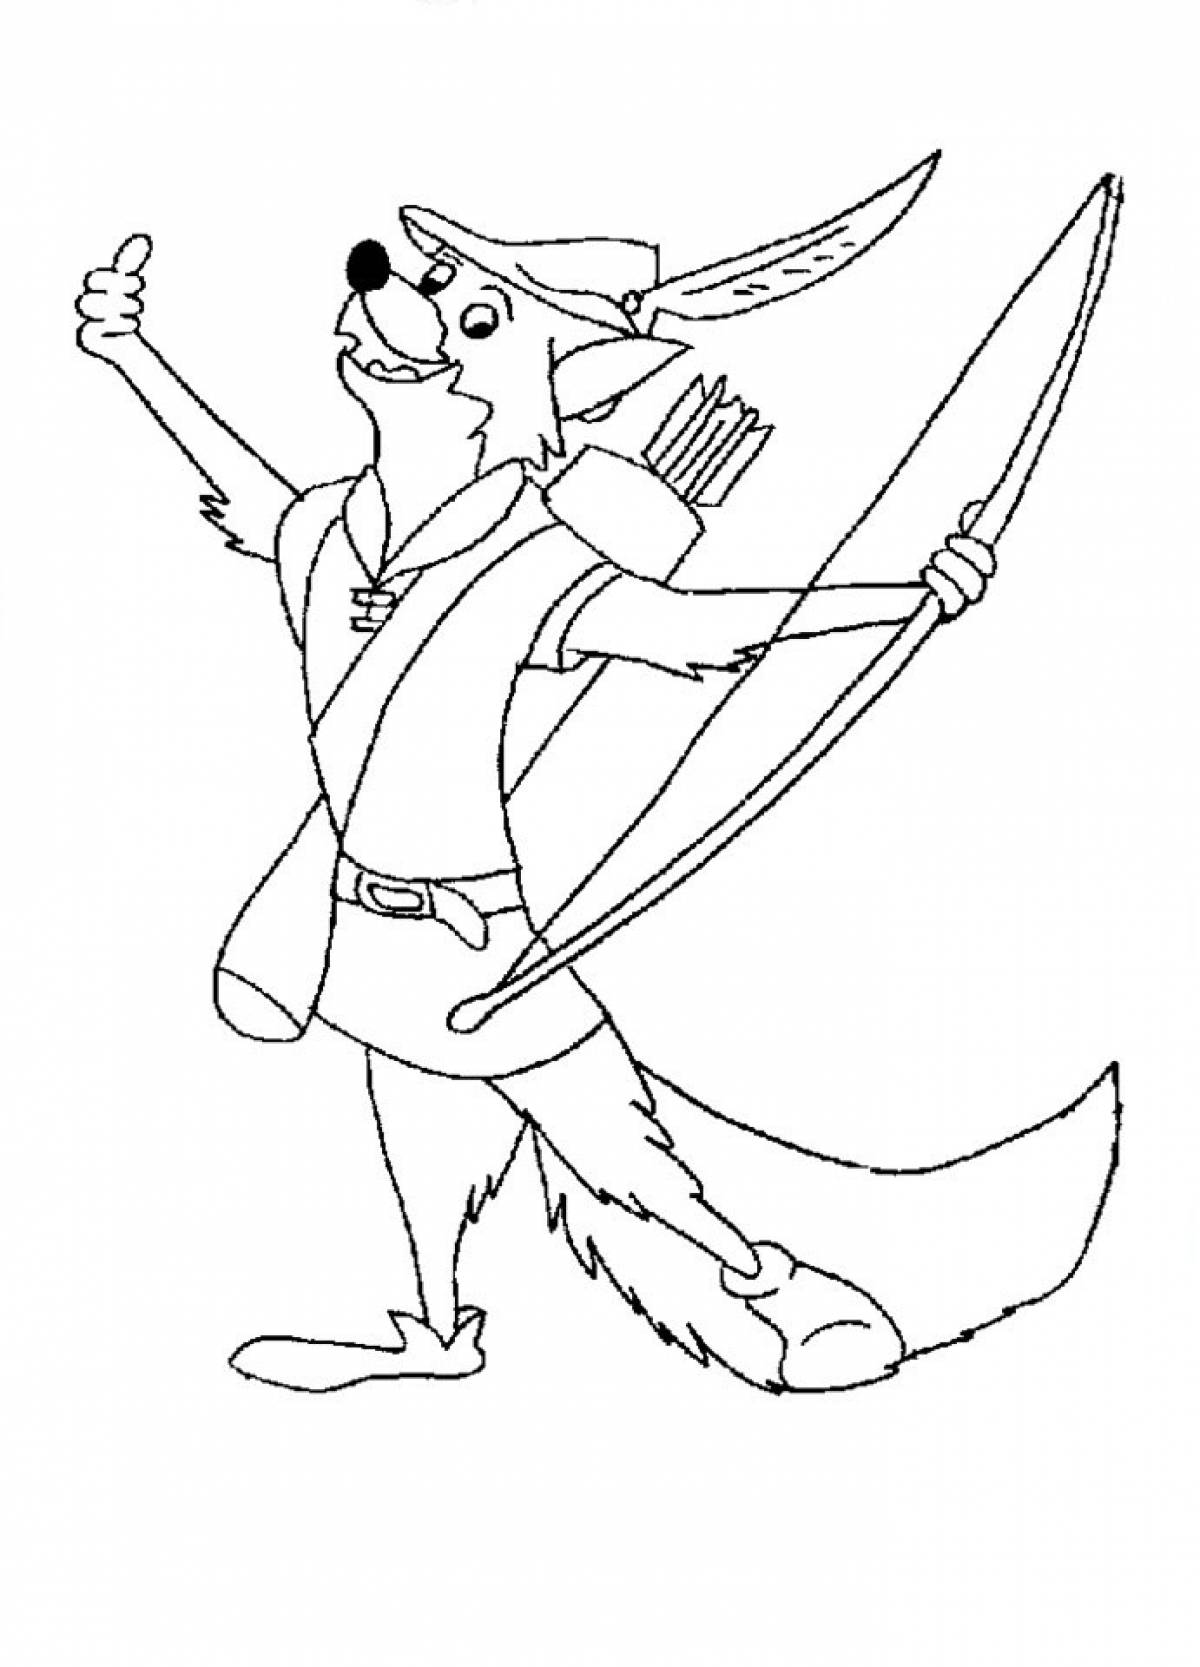 Robin Hood with bow